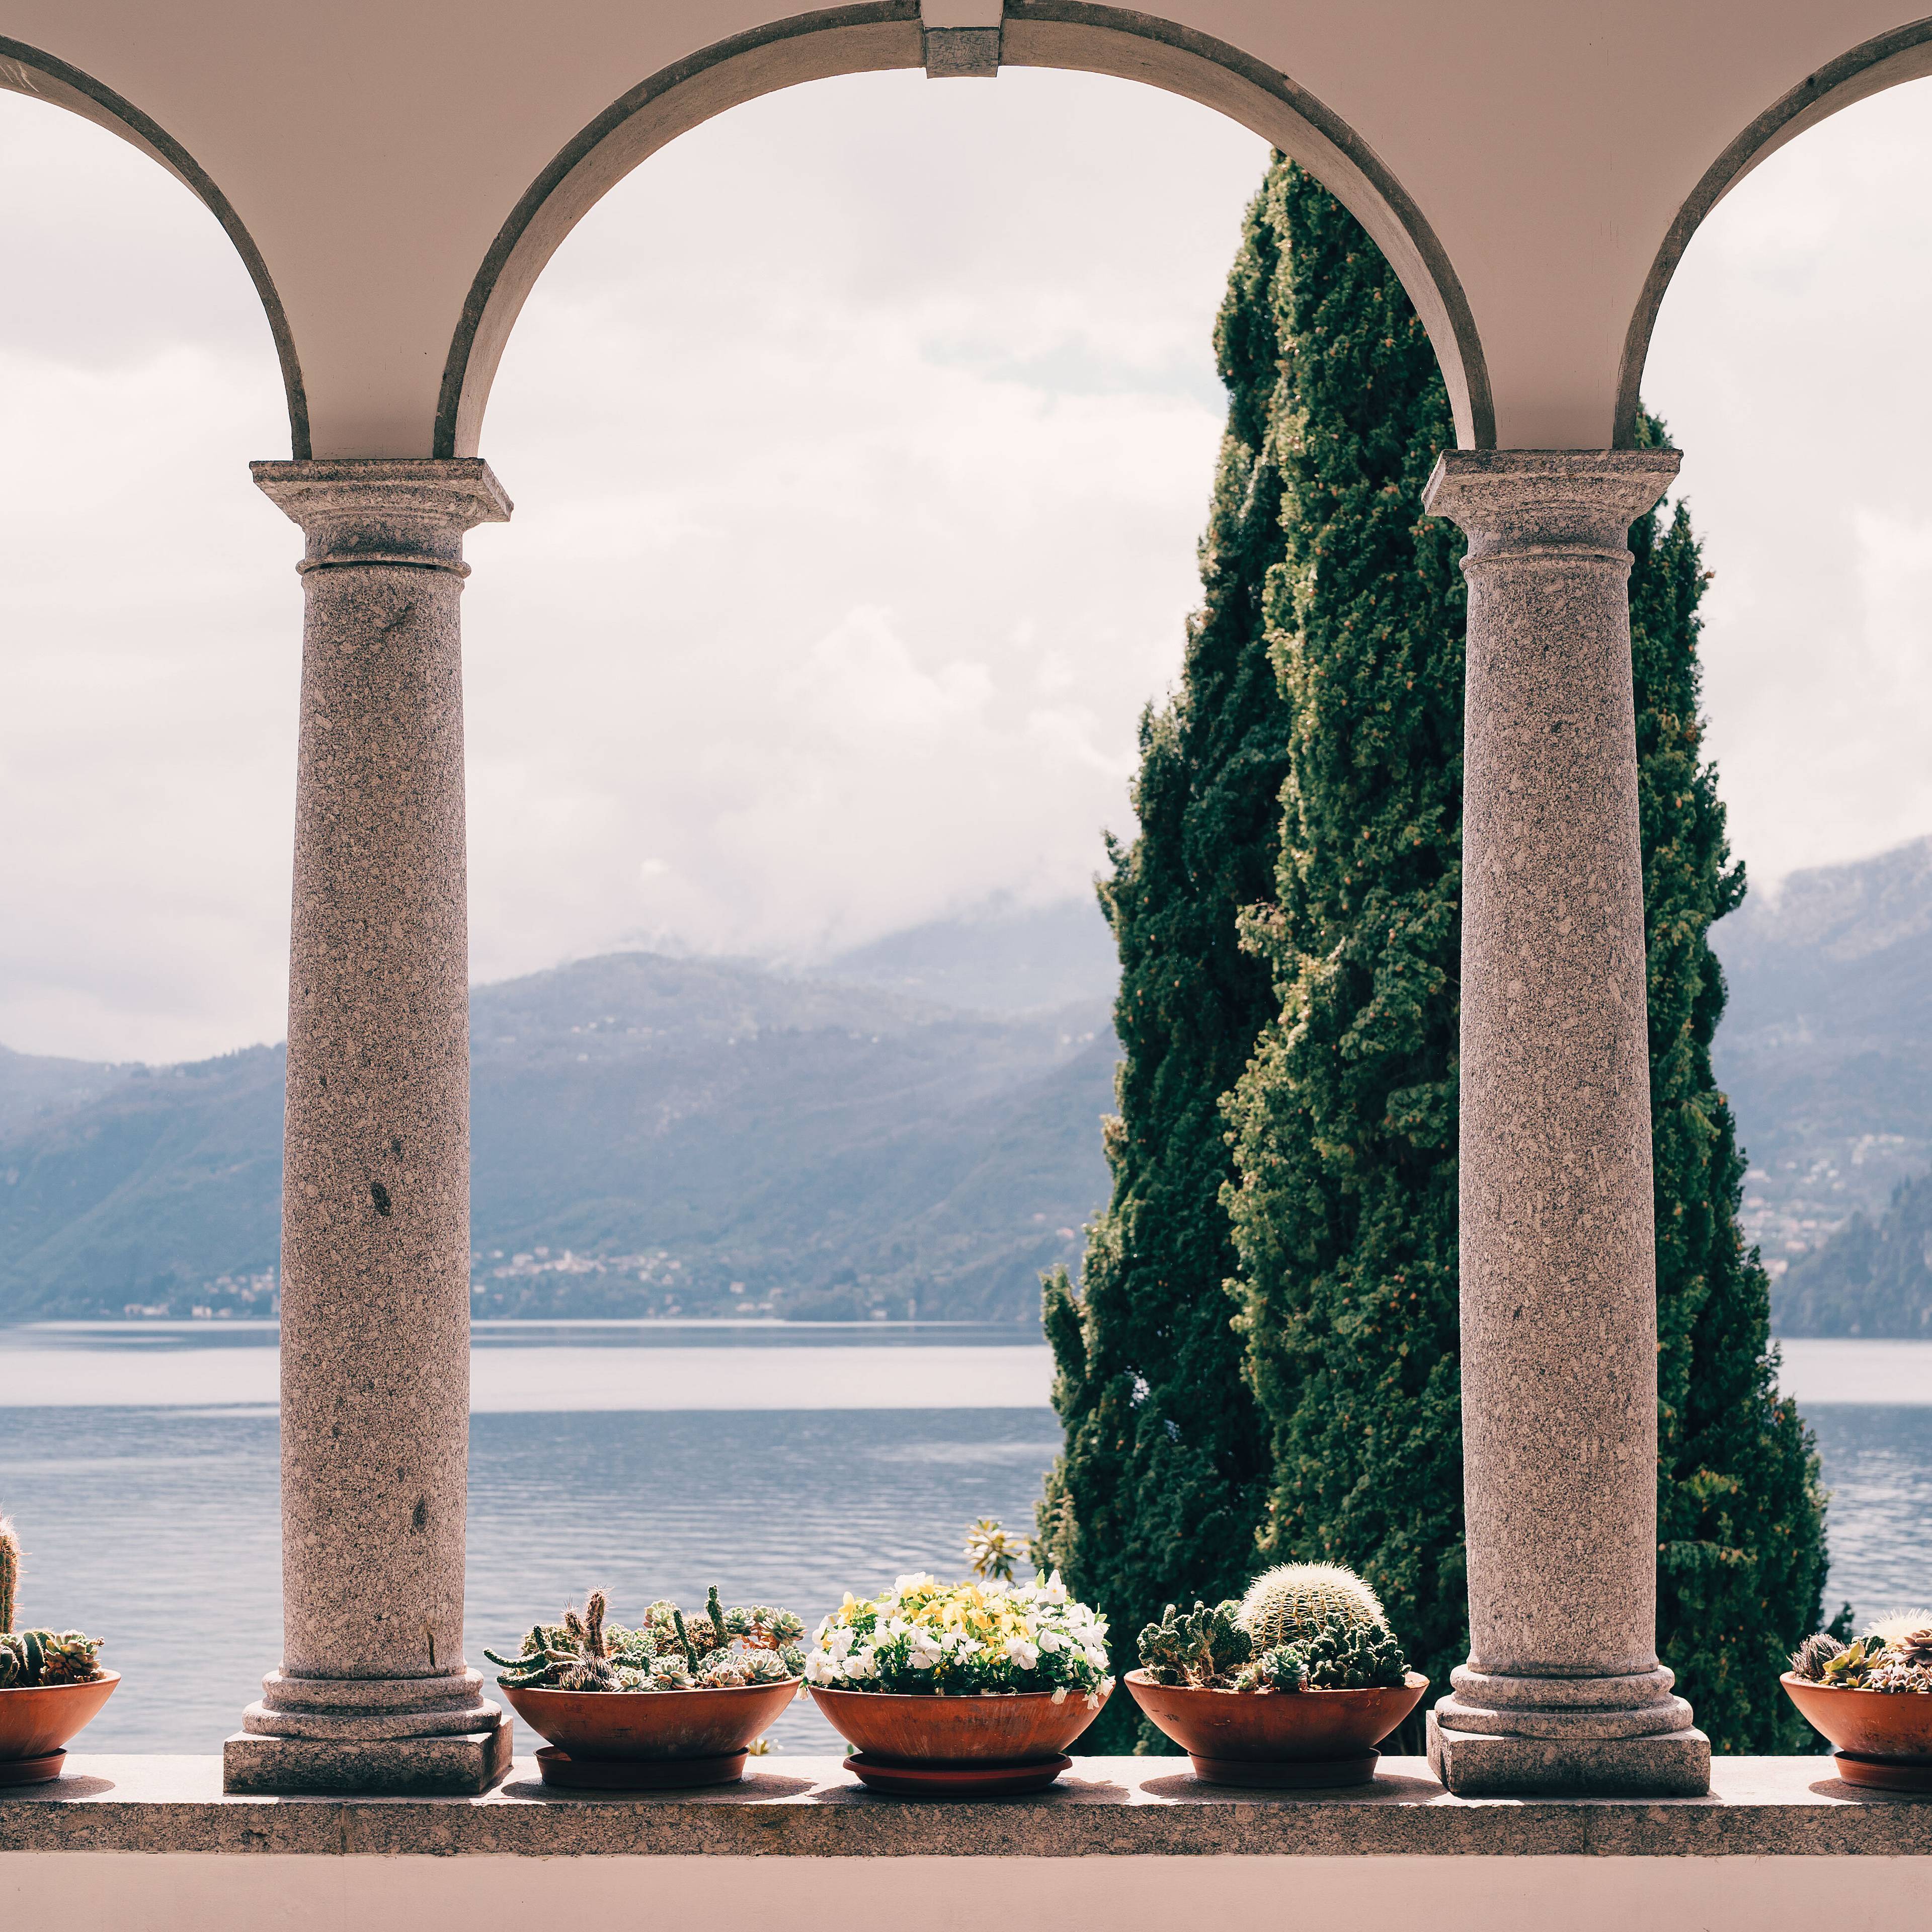 Terraza con columnas con vistas al lago de Como